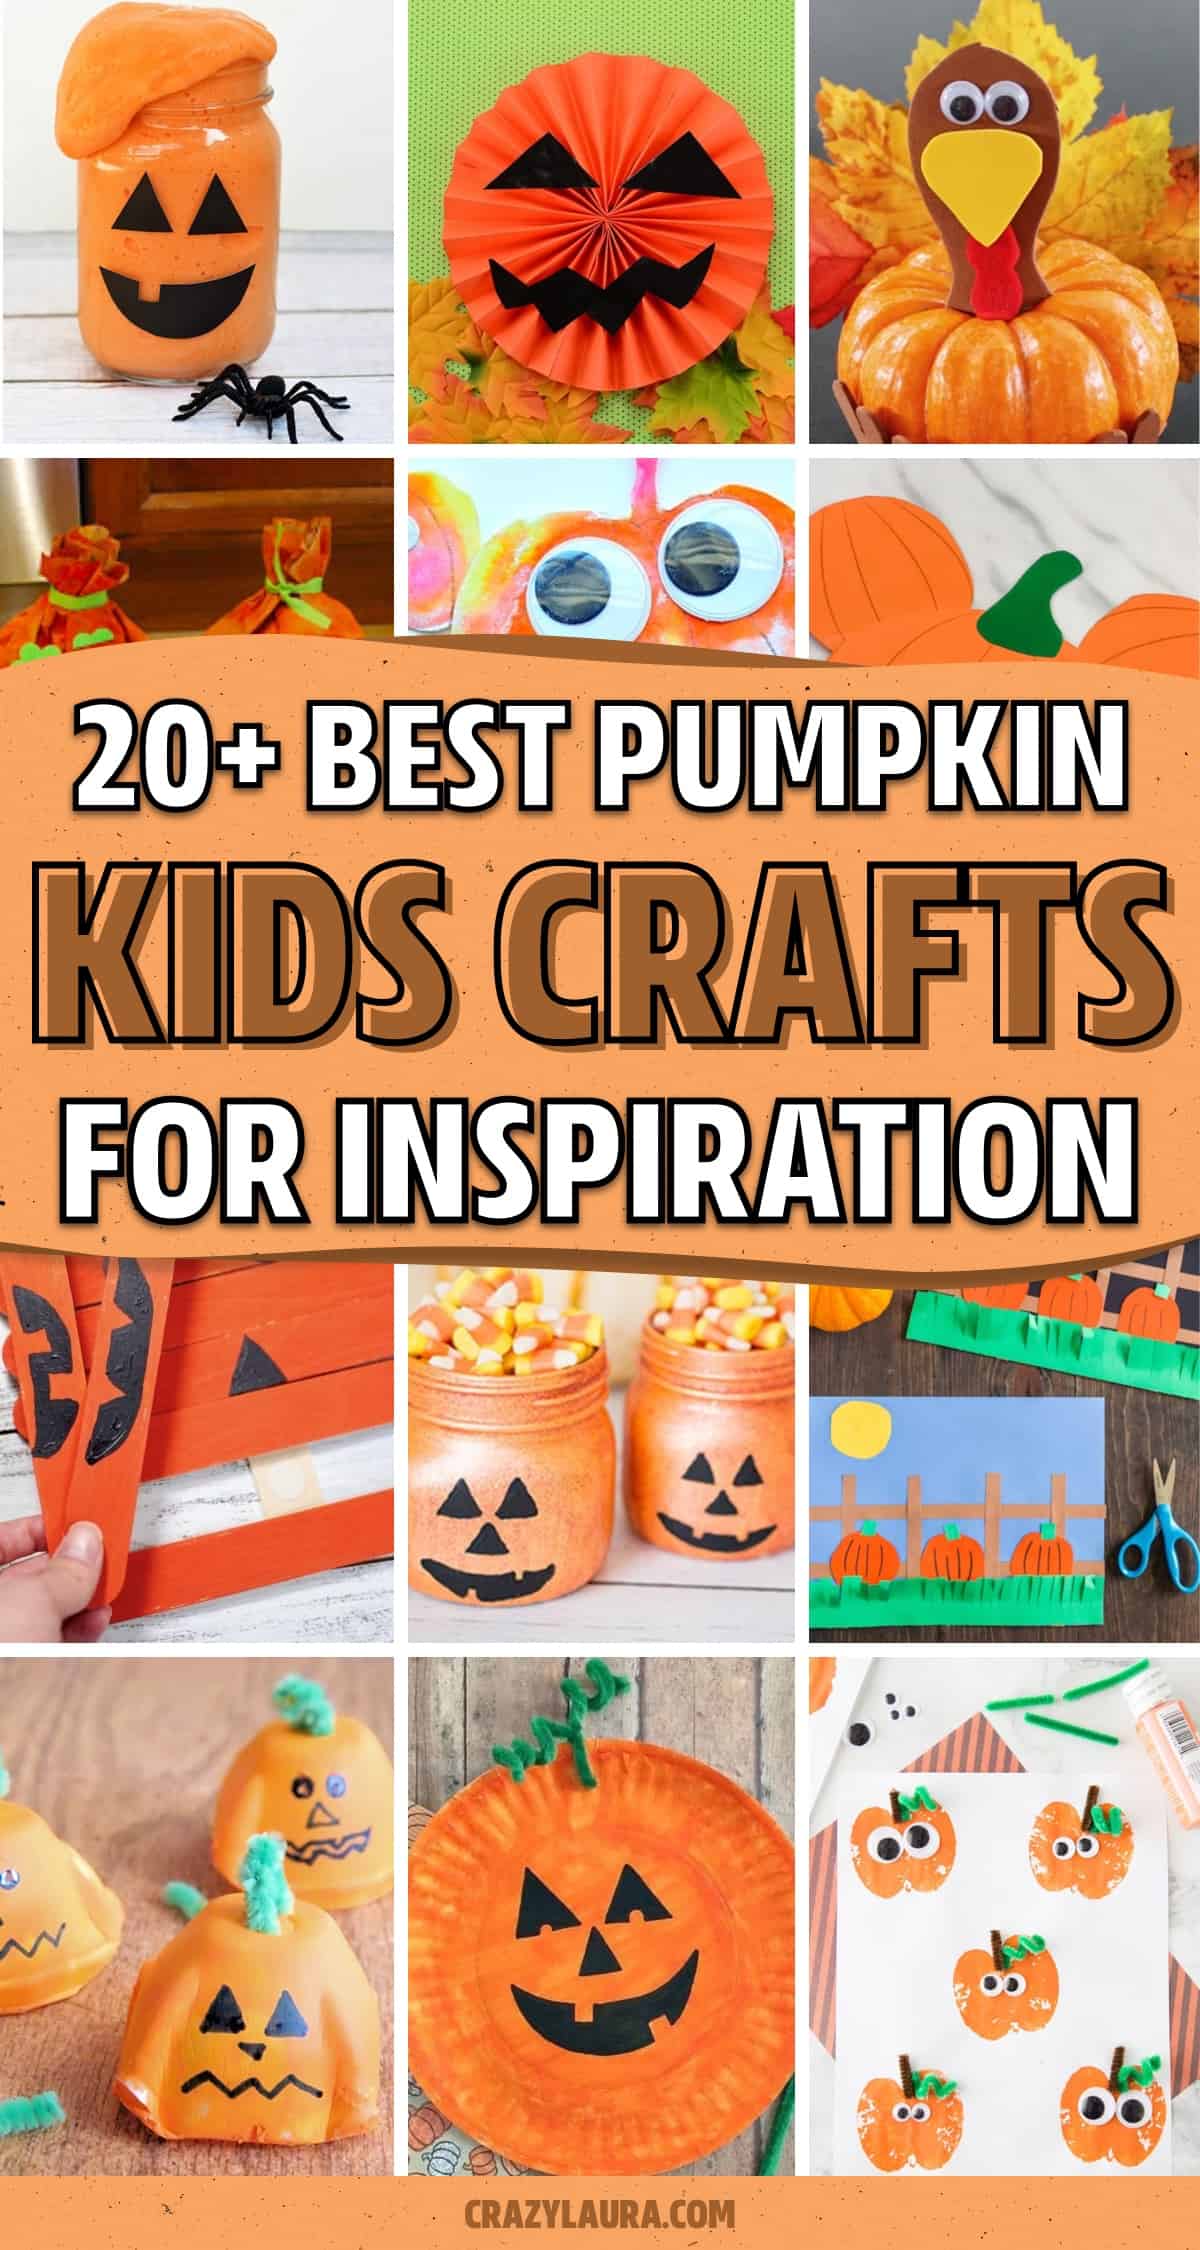 craft activity tutorials with pumpkin shapes